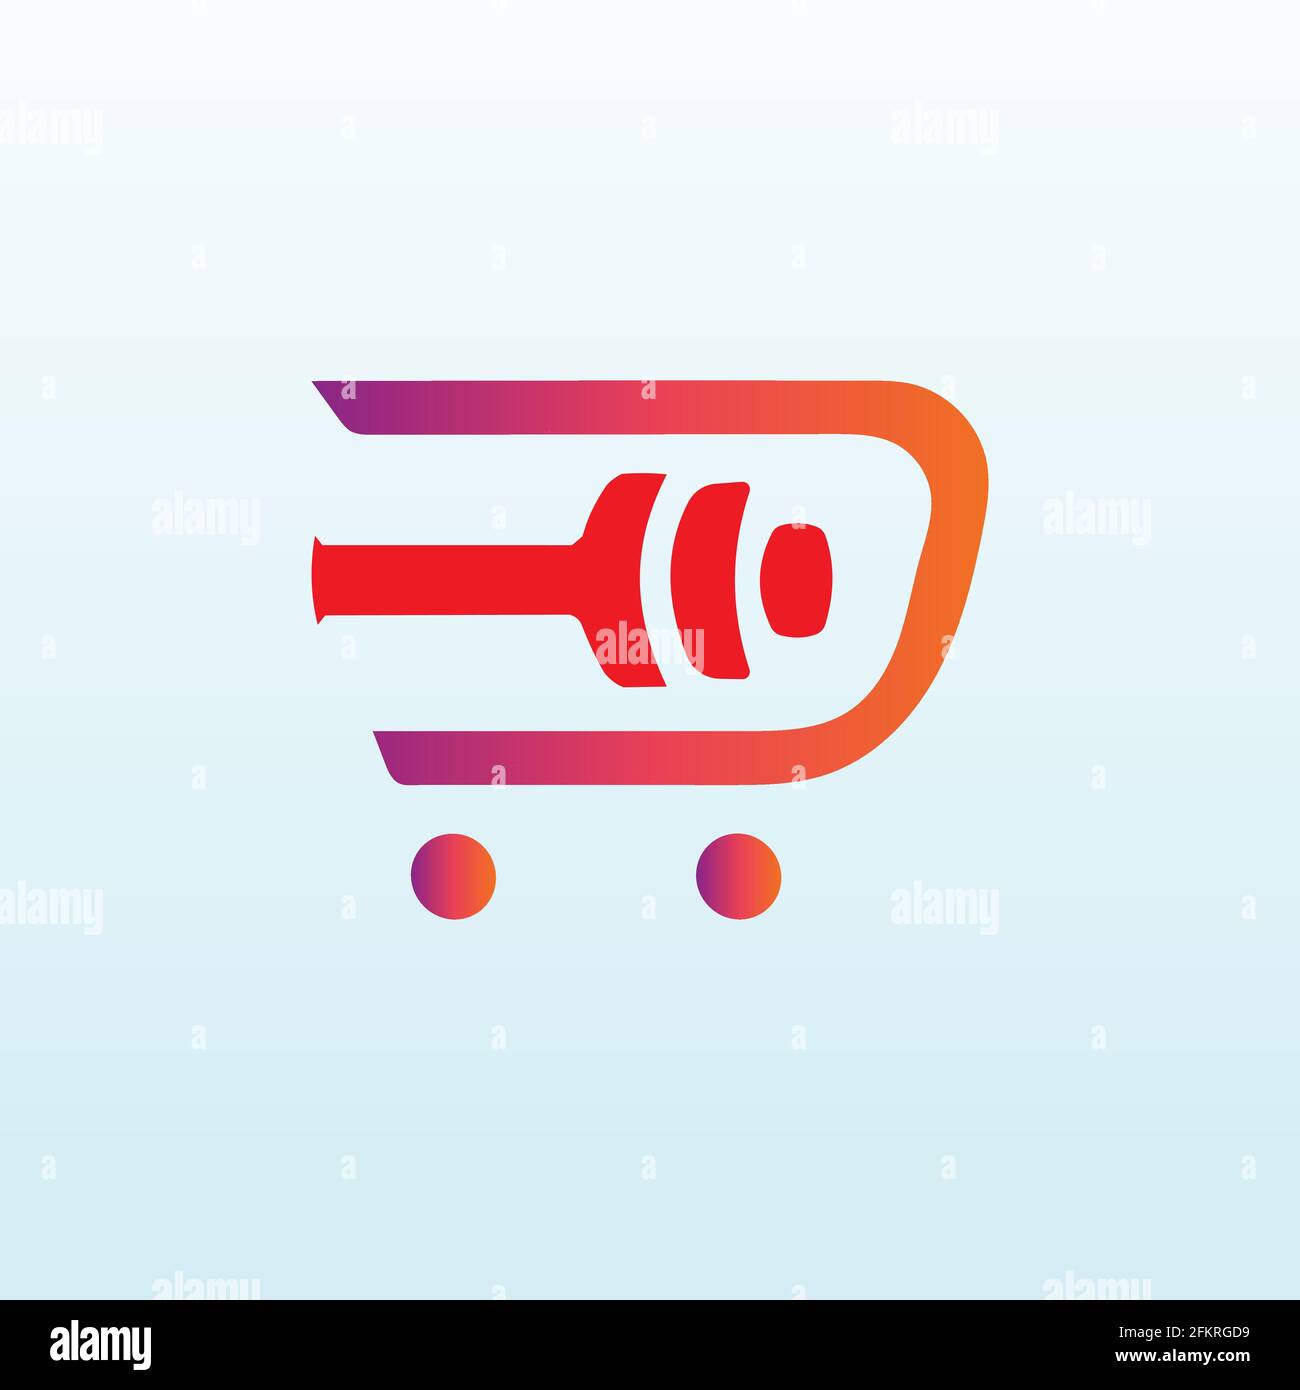 Electronic shopping cart vector logo design with fitness icon Stock Vector